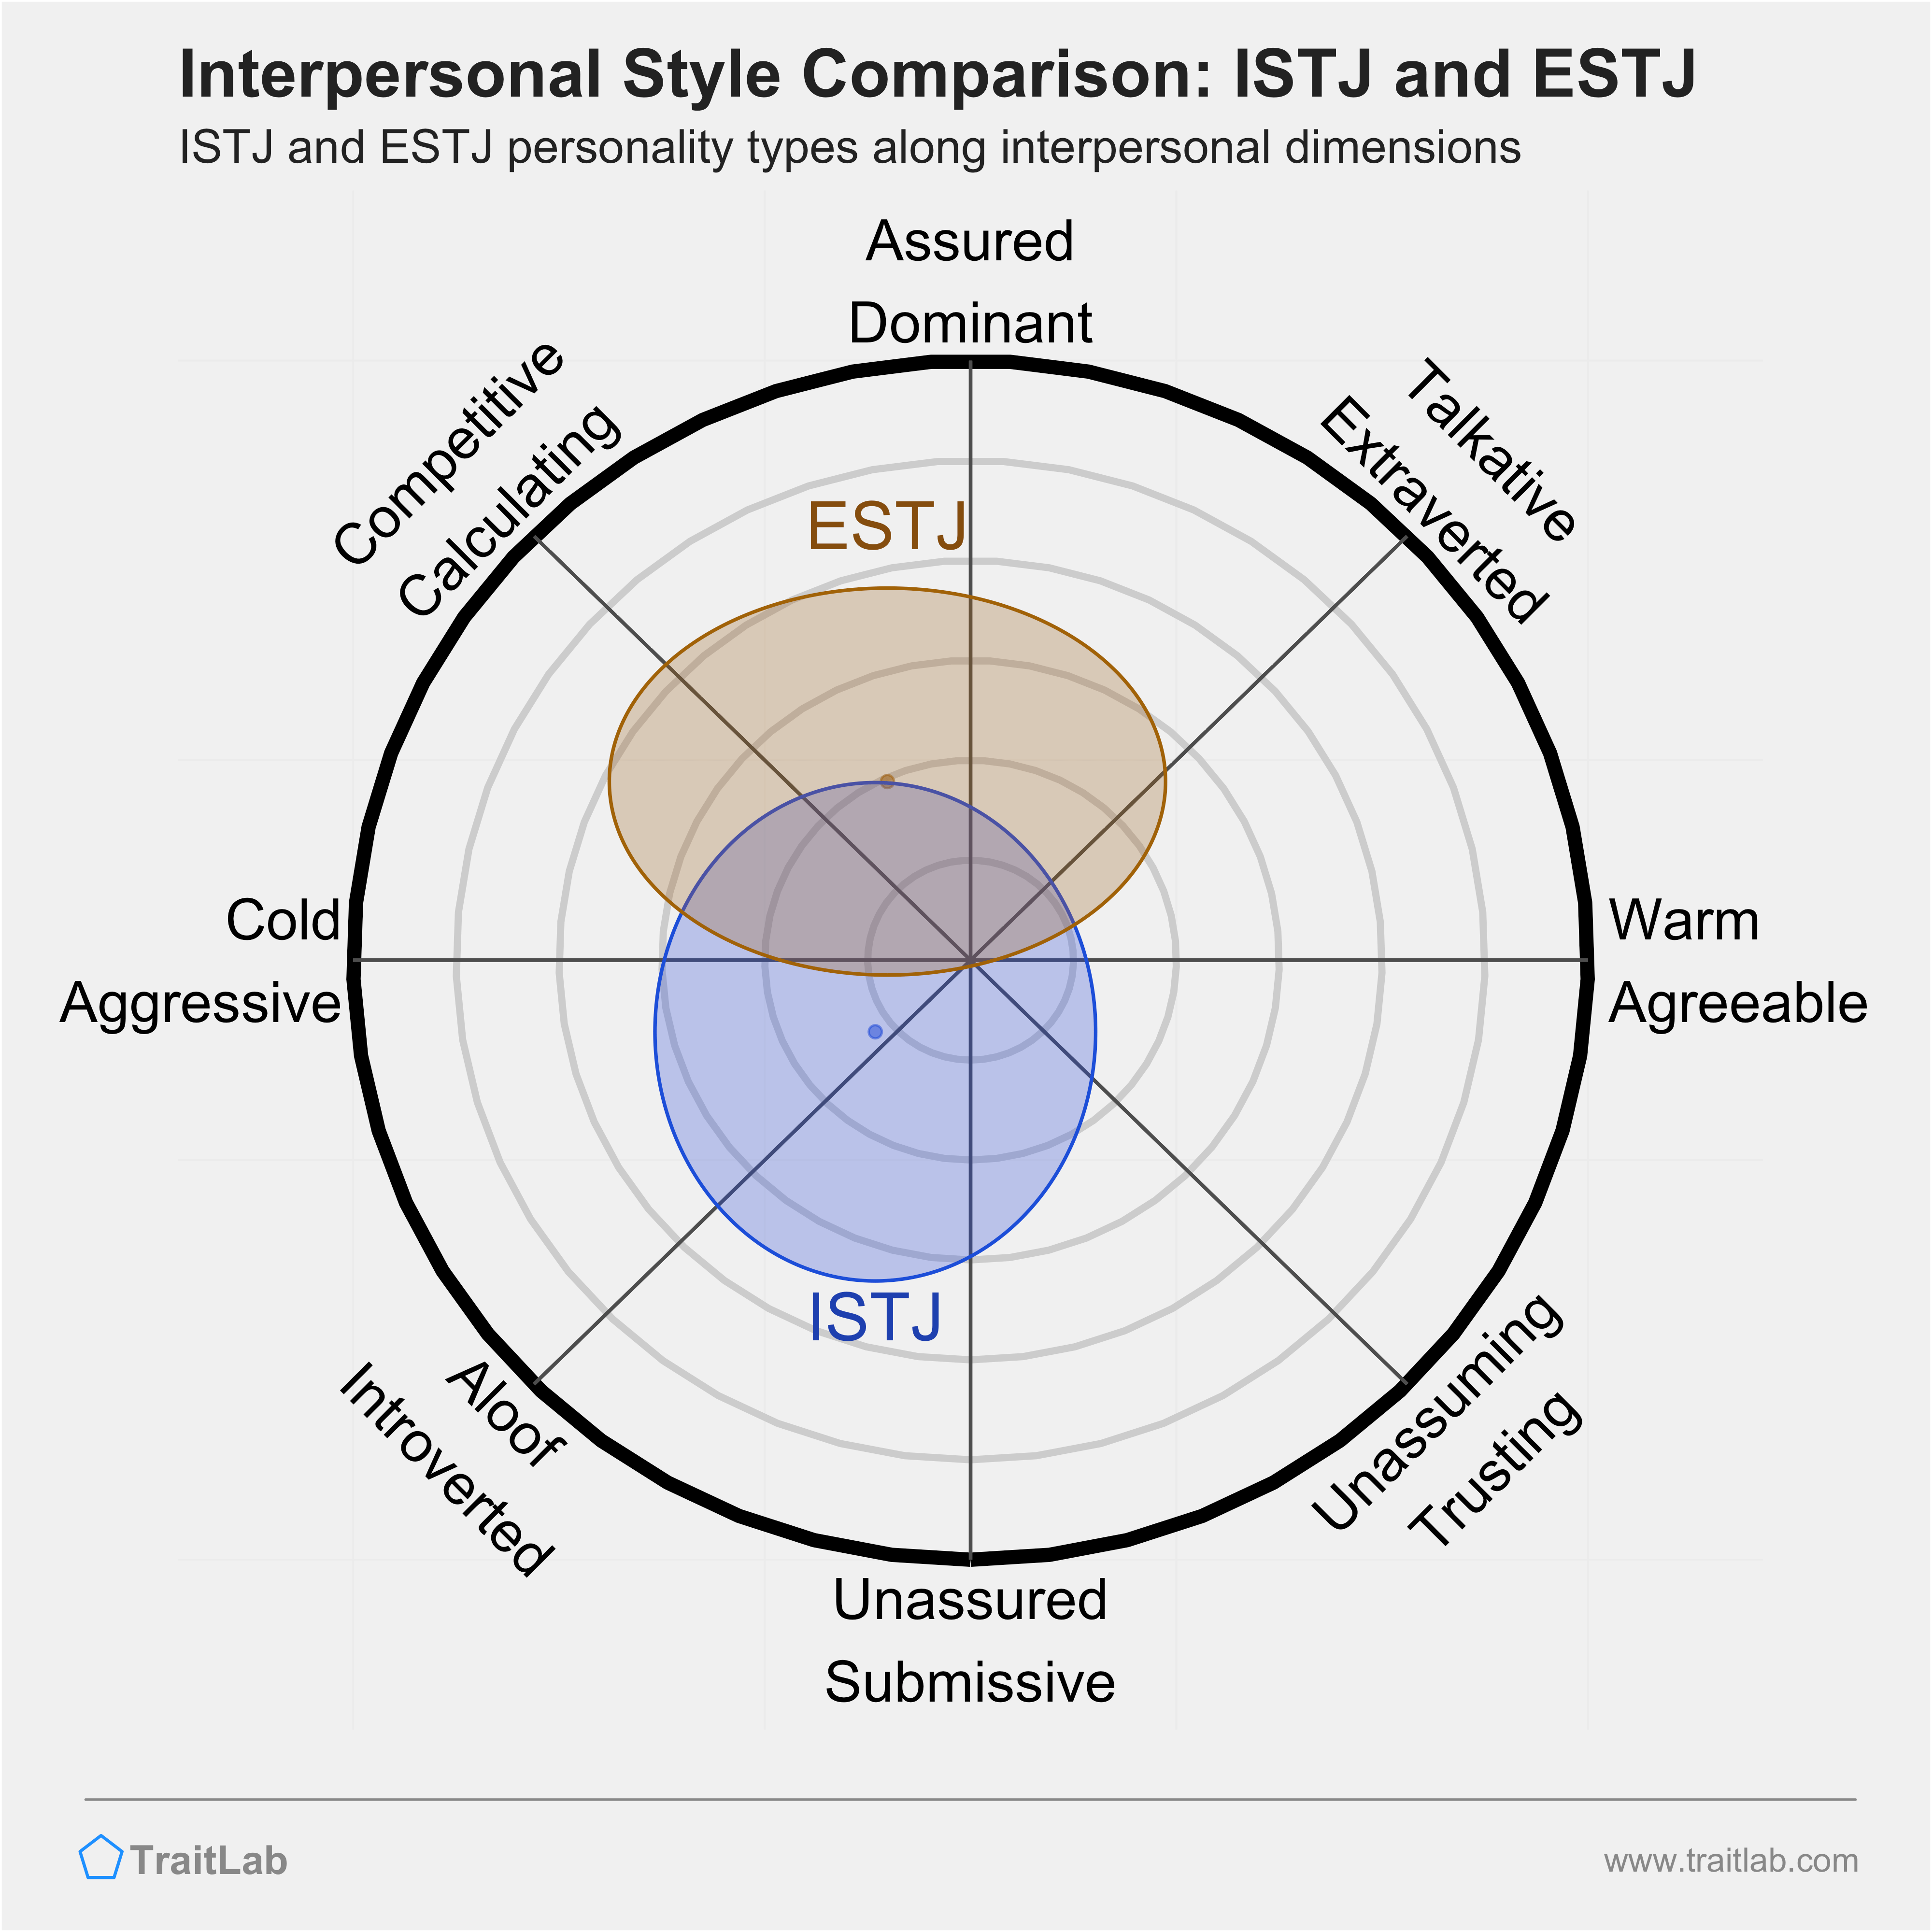 ISTJ and ESTJ comparison across interpersonal dimensions